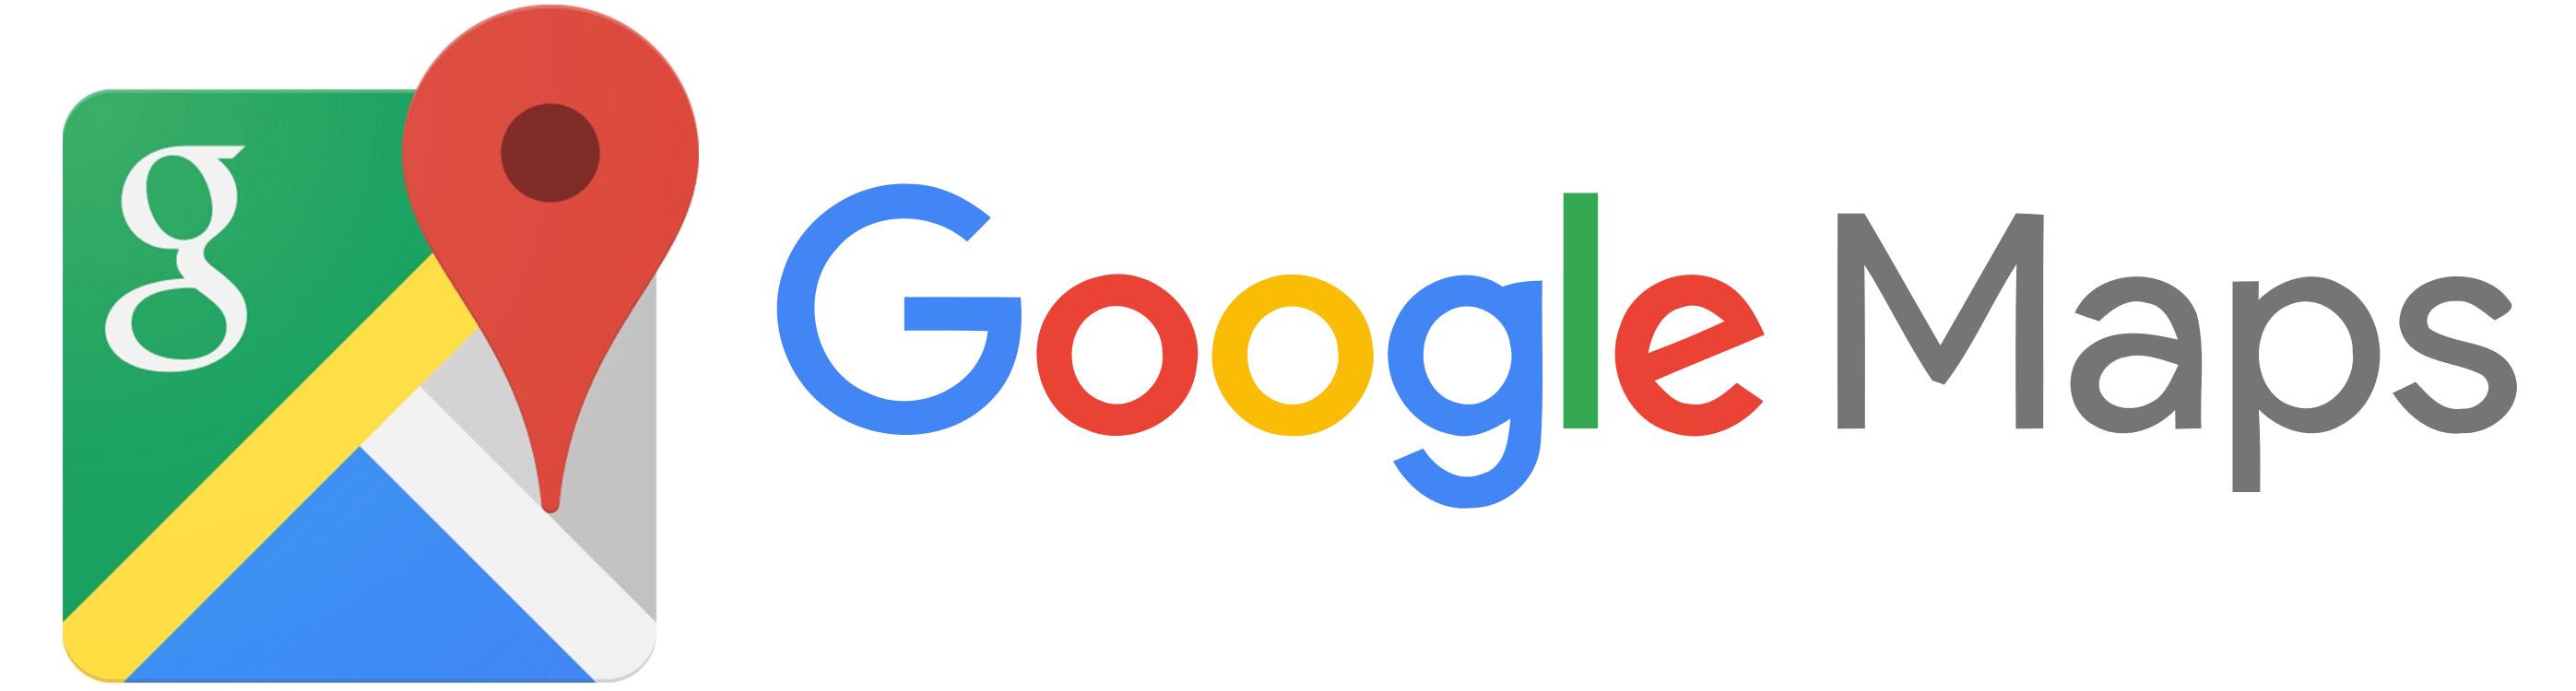 Google Maps Logo - Google maps Logos